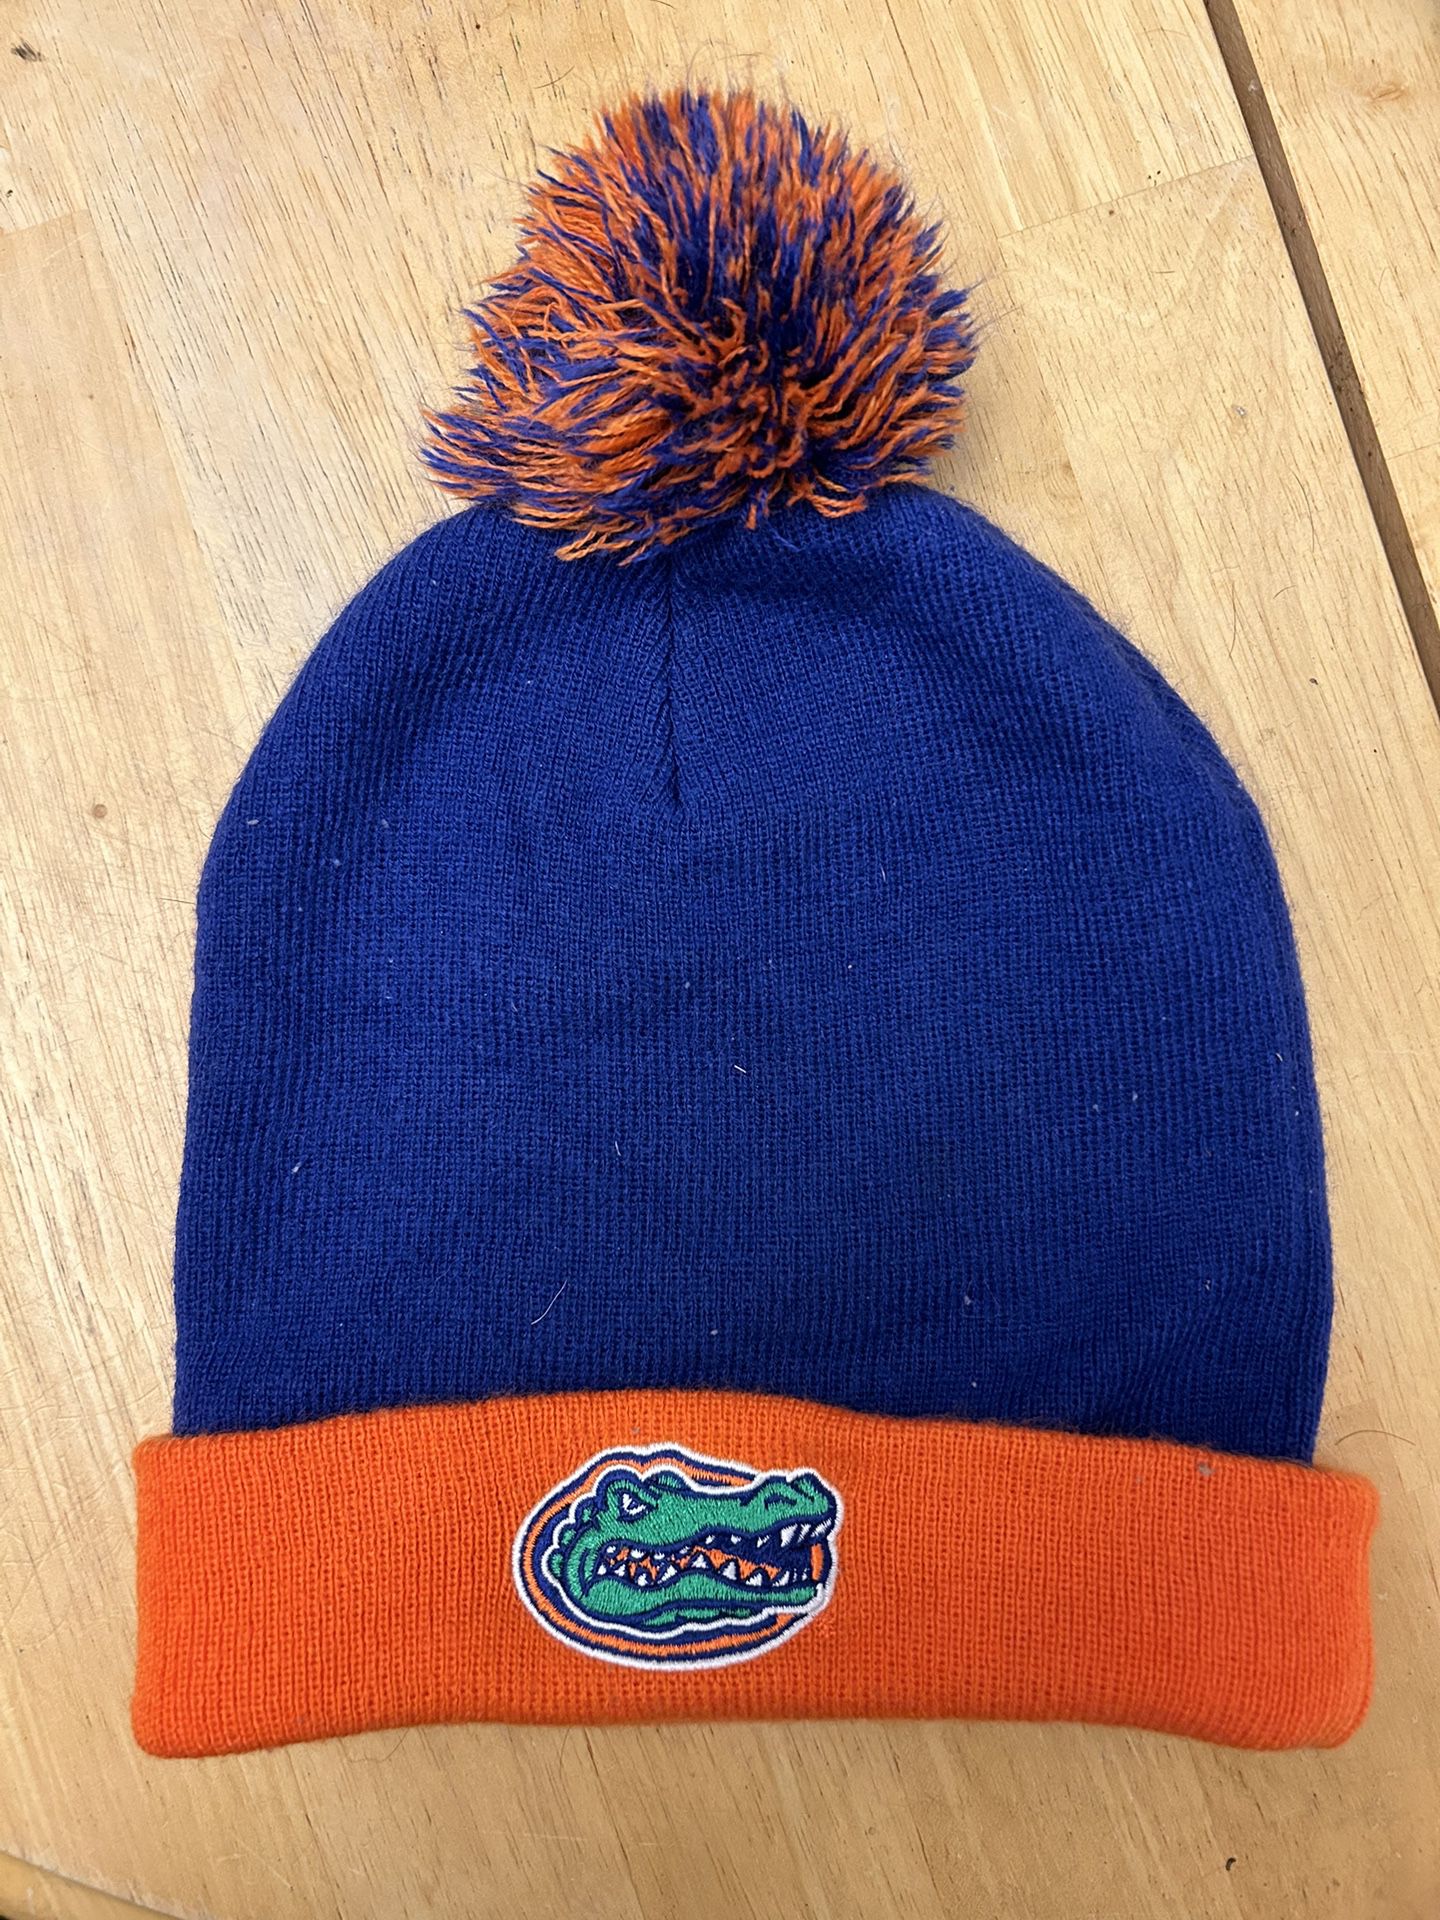 Florida Gators Beanie Hat Cap NCAA Football Prange Blue